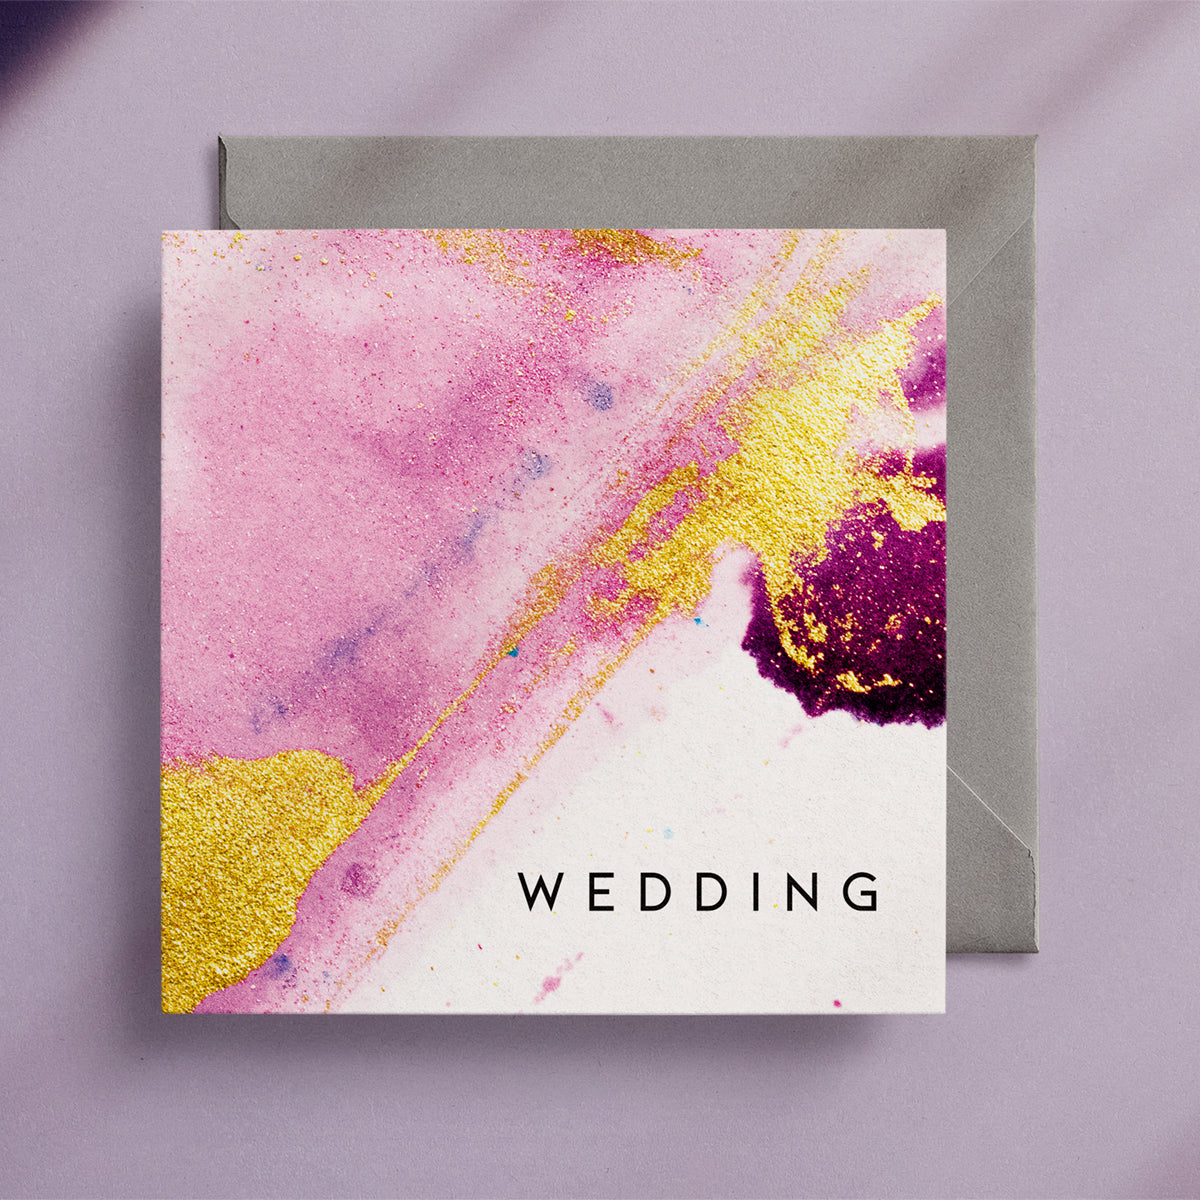 Wedding - ABSTRACT Greeting Card